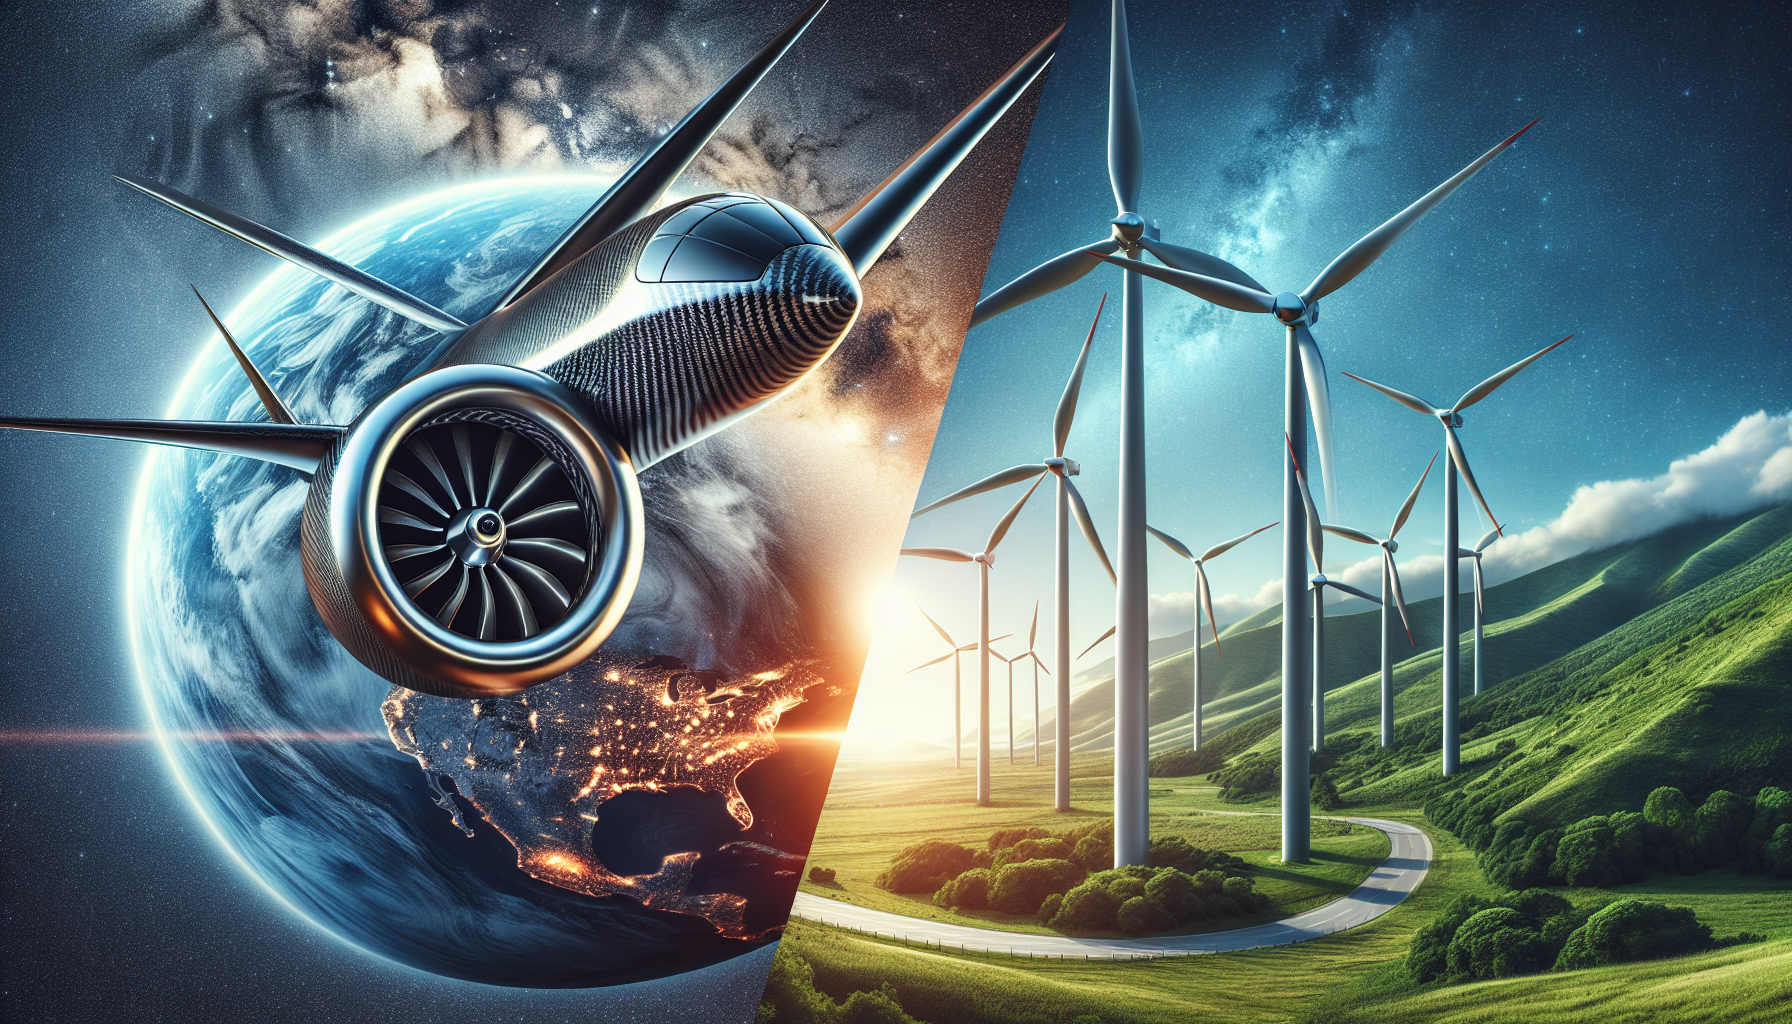 Carbon fiber composites in aerospace and wind turbines